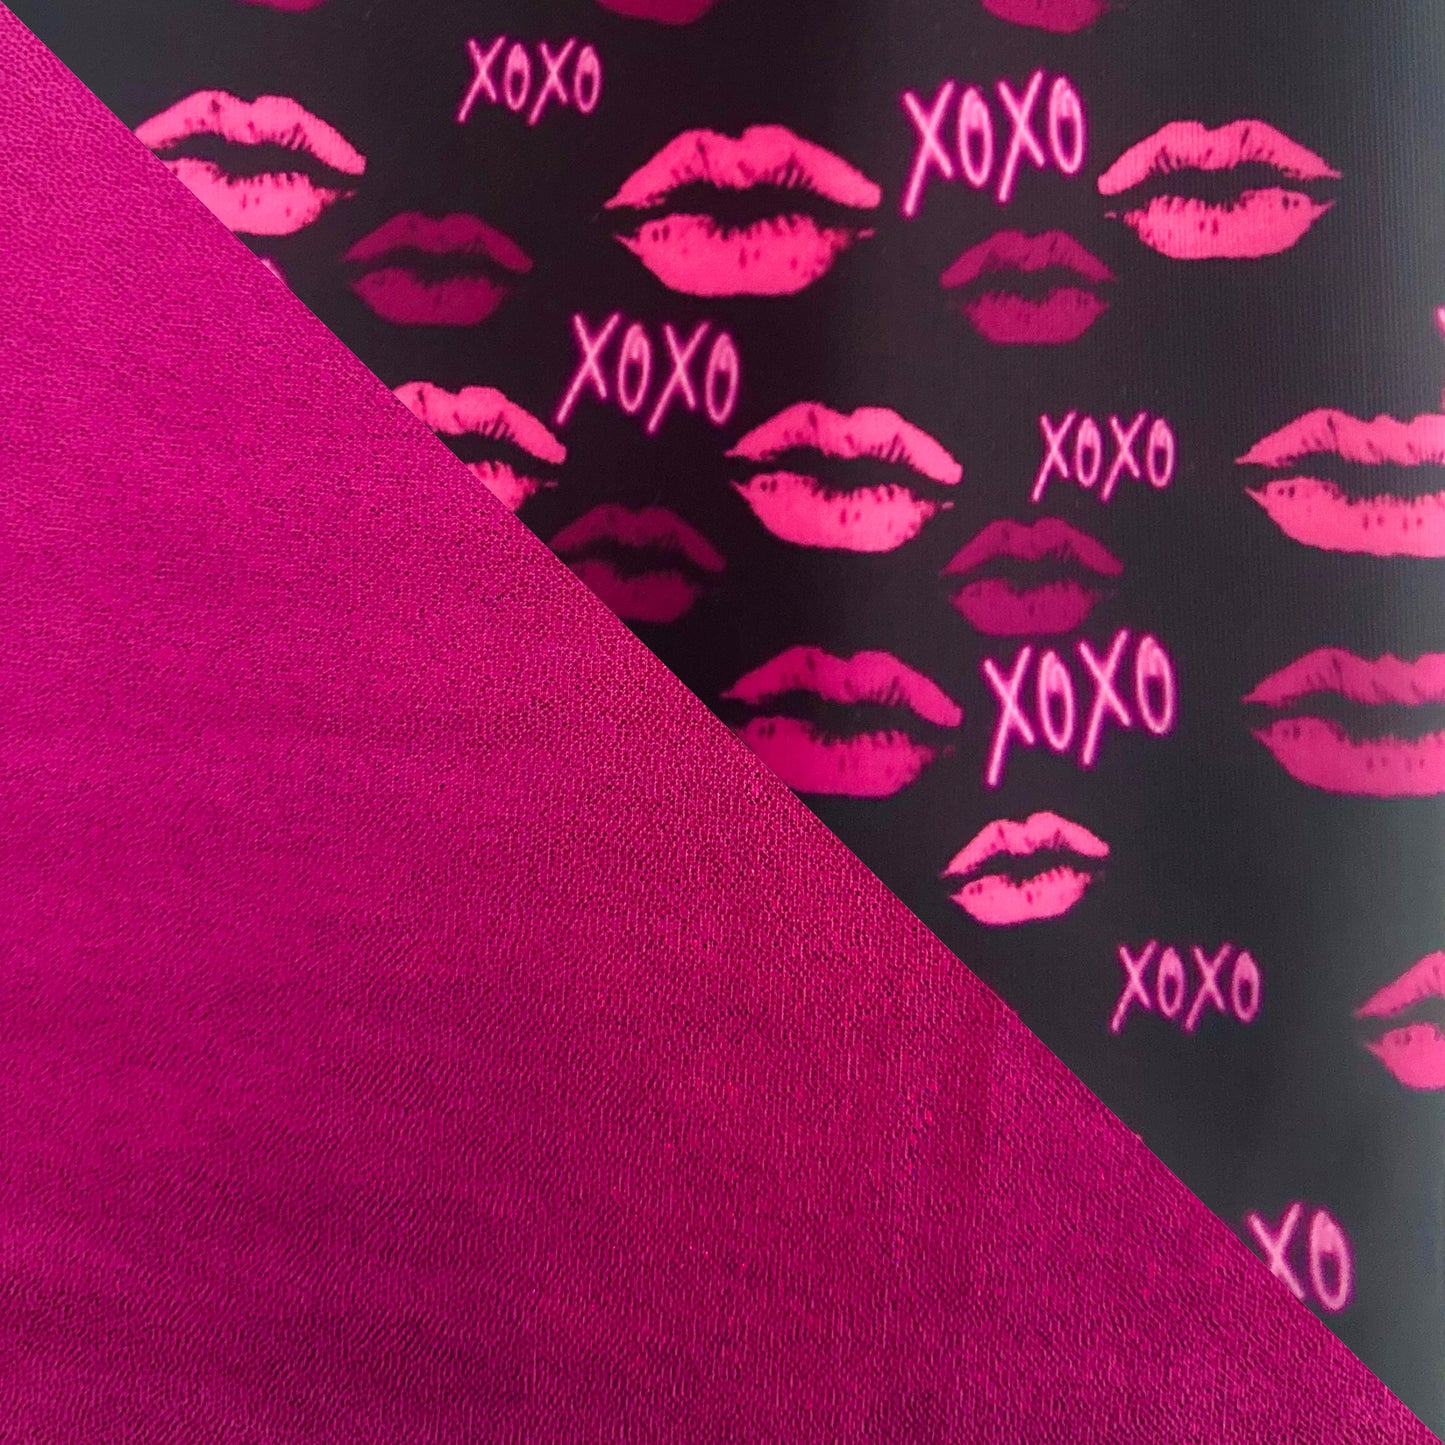 XOXO Kisses and Pink Glitter